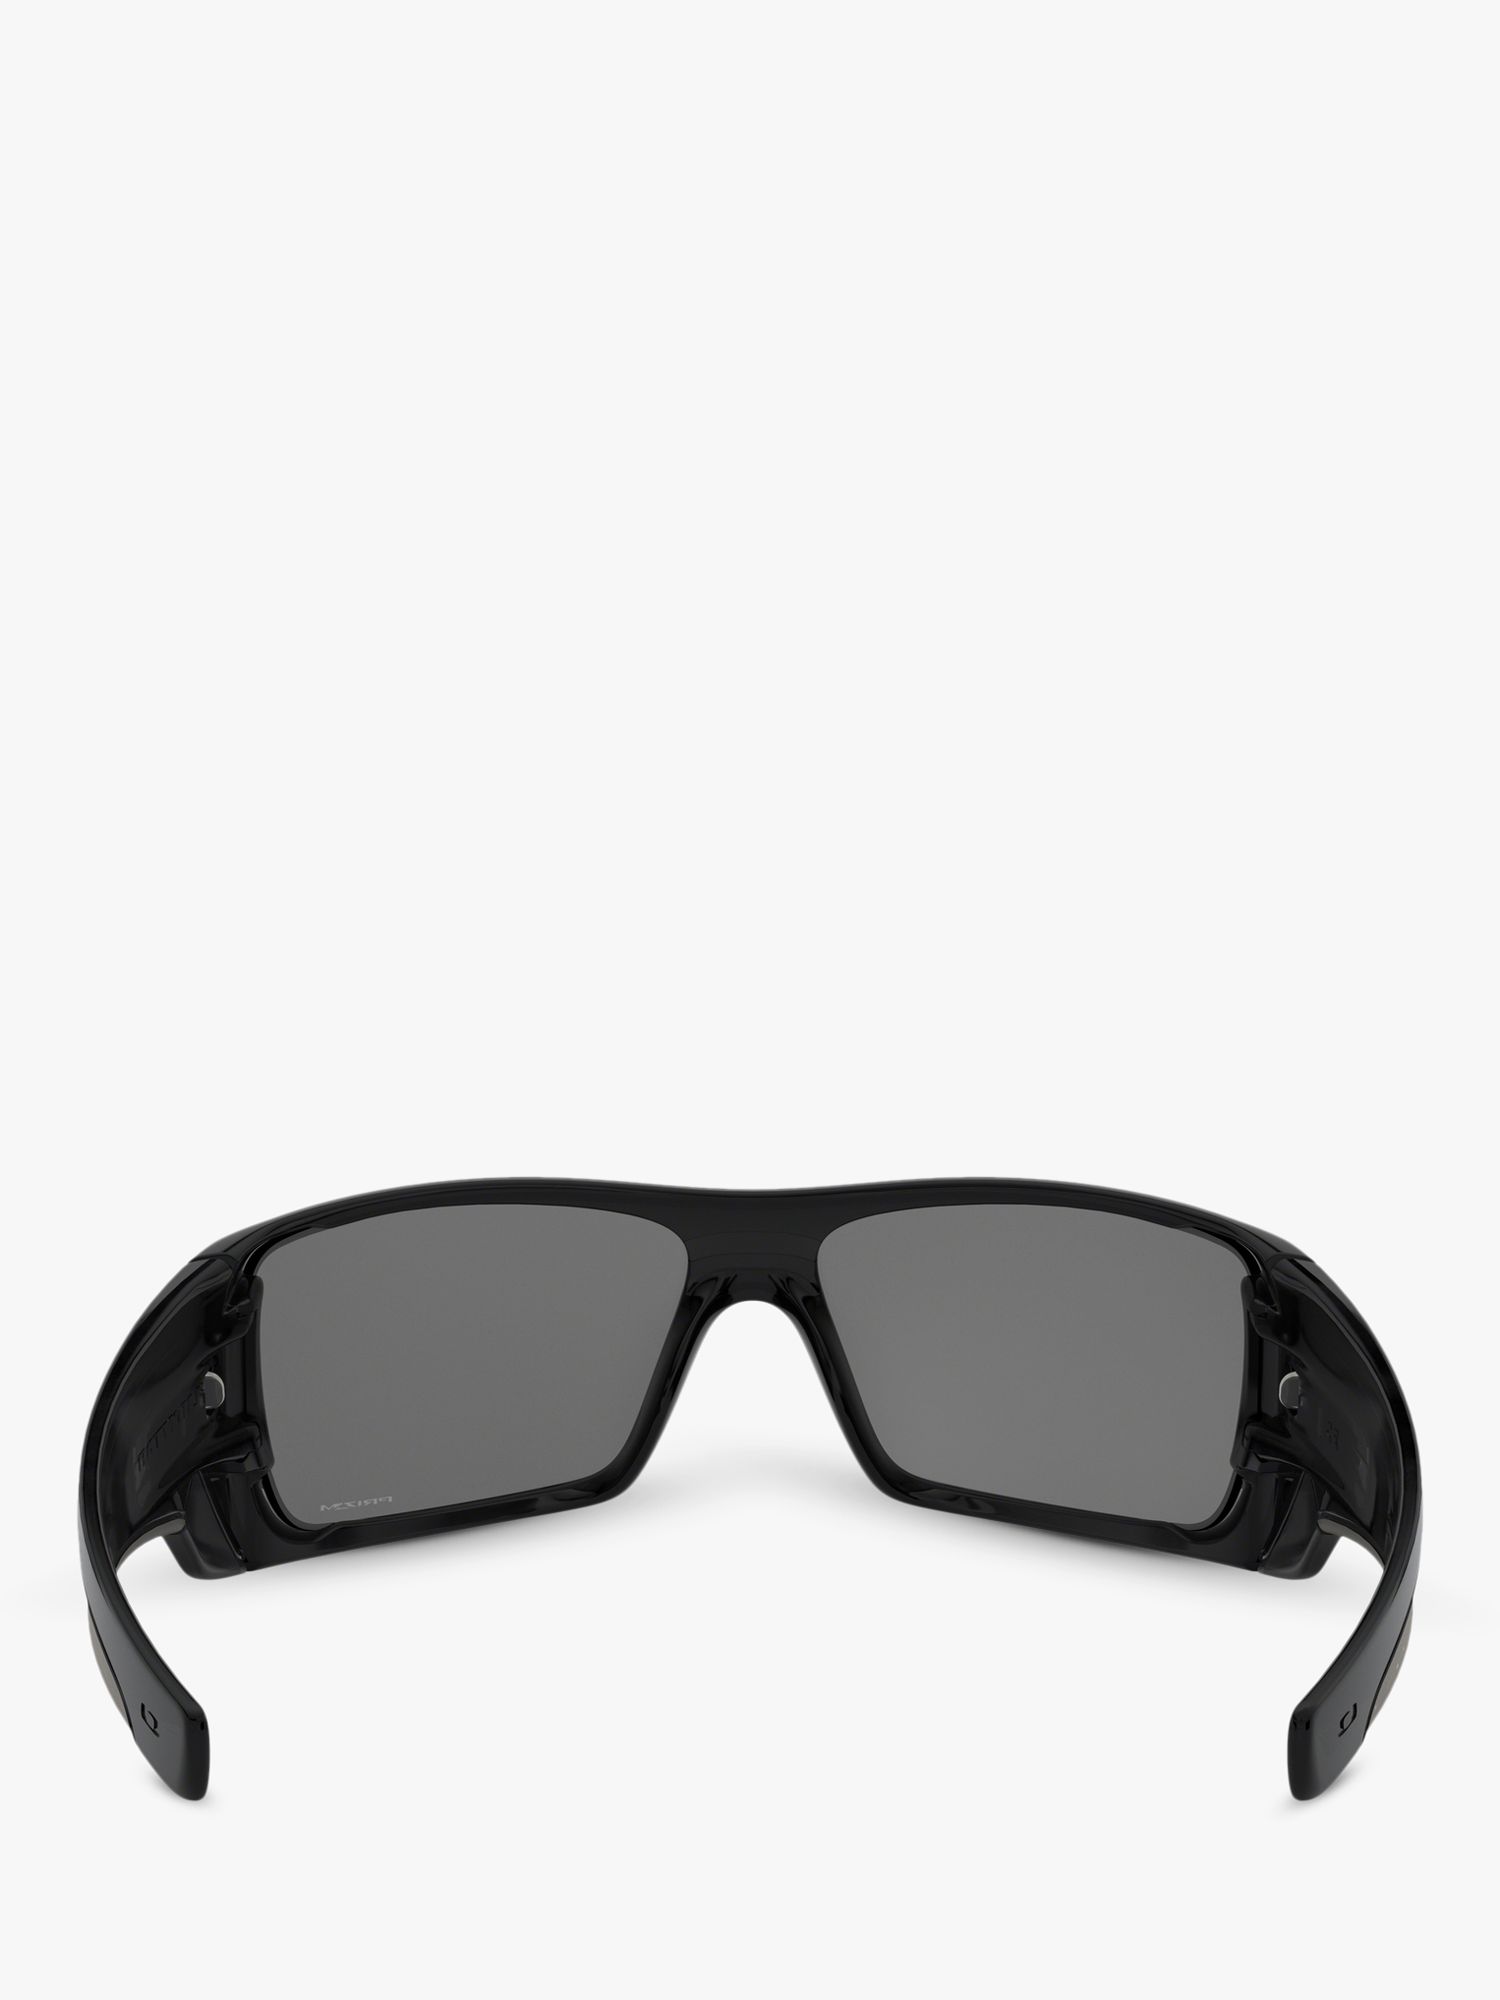 Oakley OO9101 Men's Batwolf Prizm Rectangular Sunglasses, Black Ink/Grey